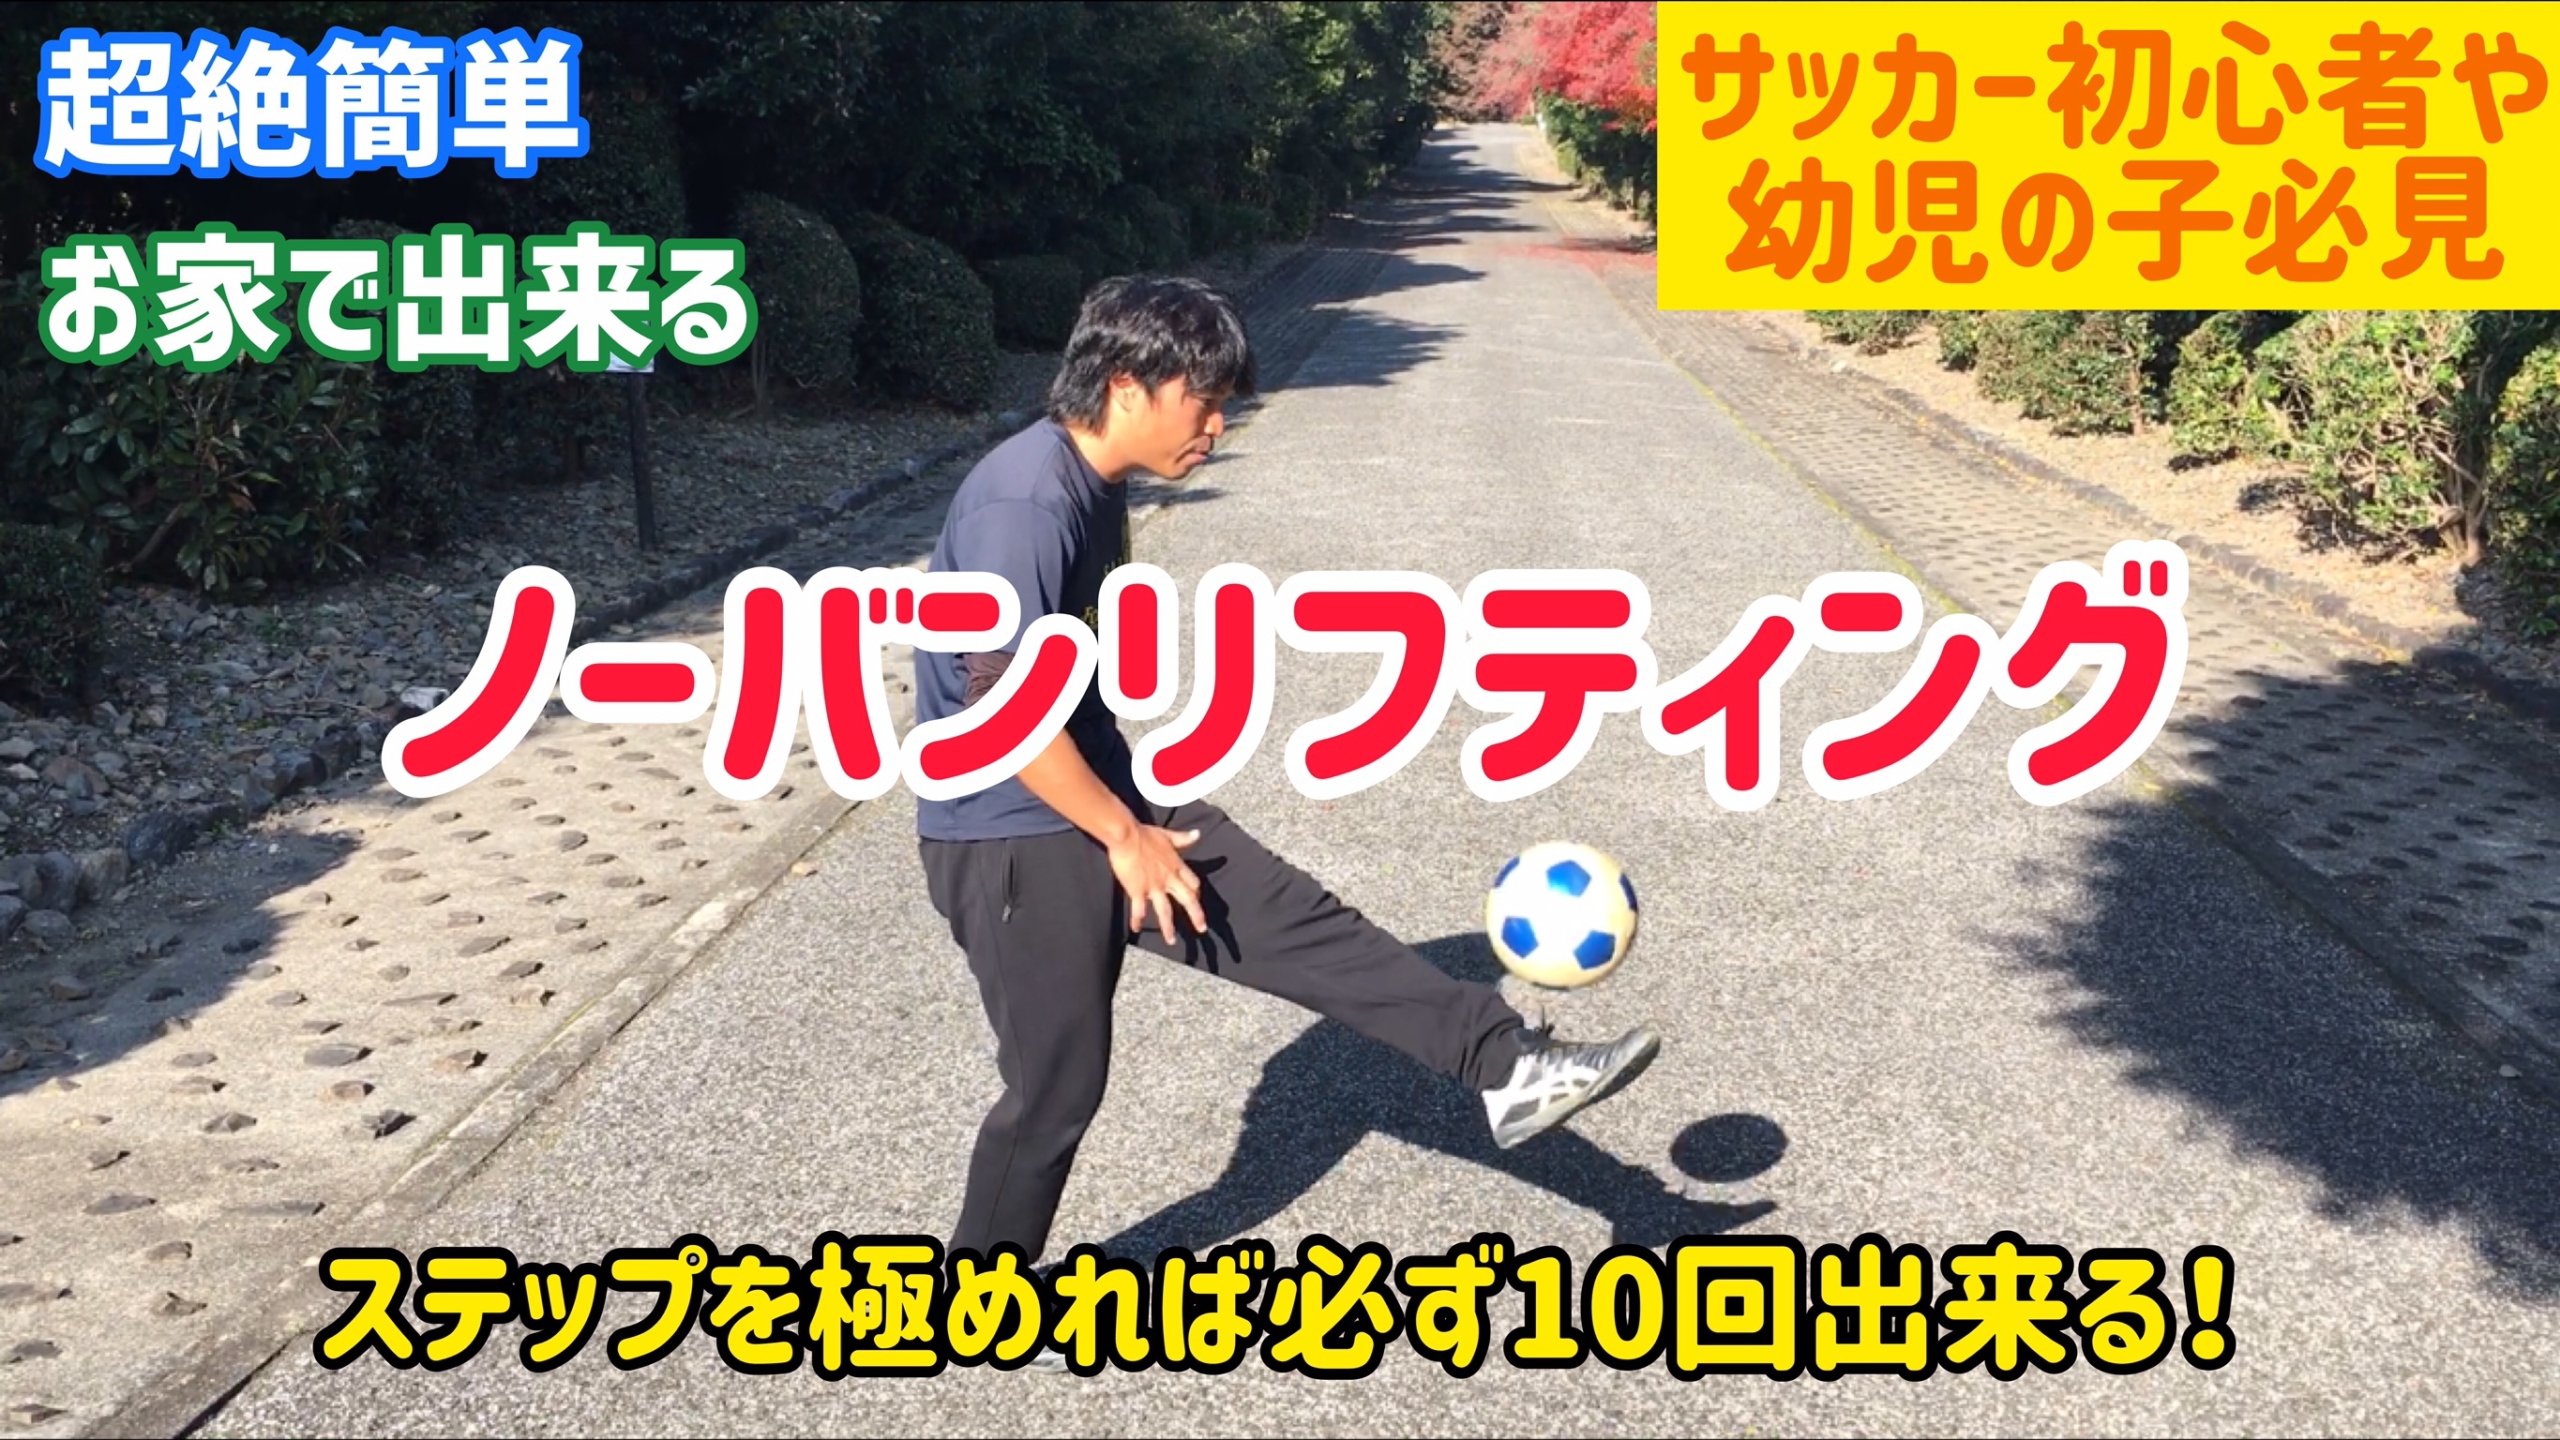 Youtube動画 今回は 京都 サイフットボールクラブ